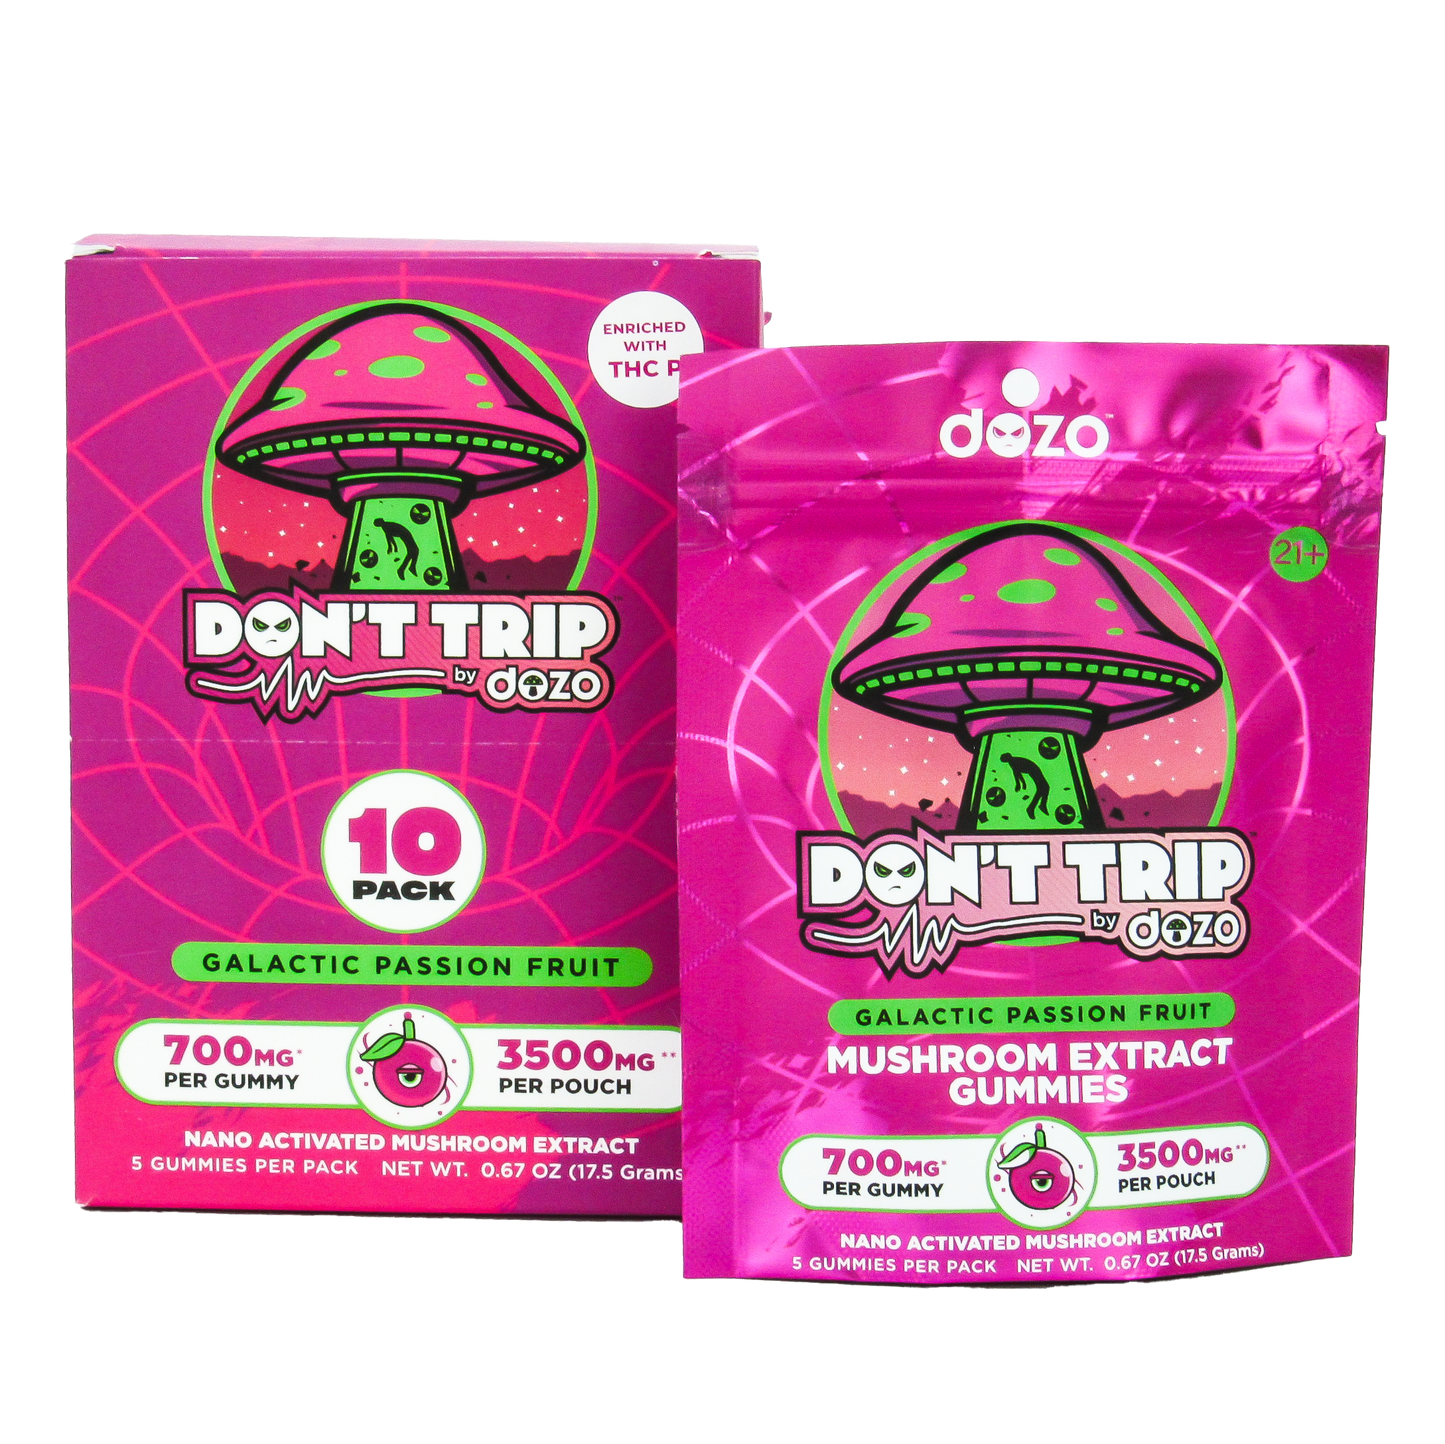 Dozo - "Don't Trip" Mushroom Gummies (10ct Box) - 3500mg per Pouch